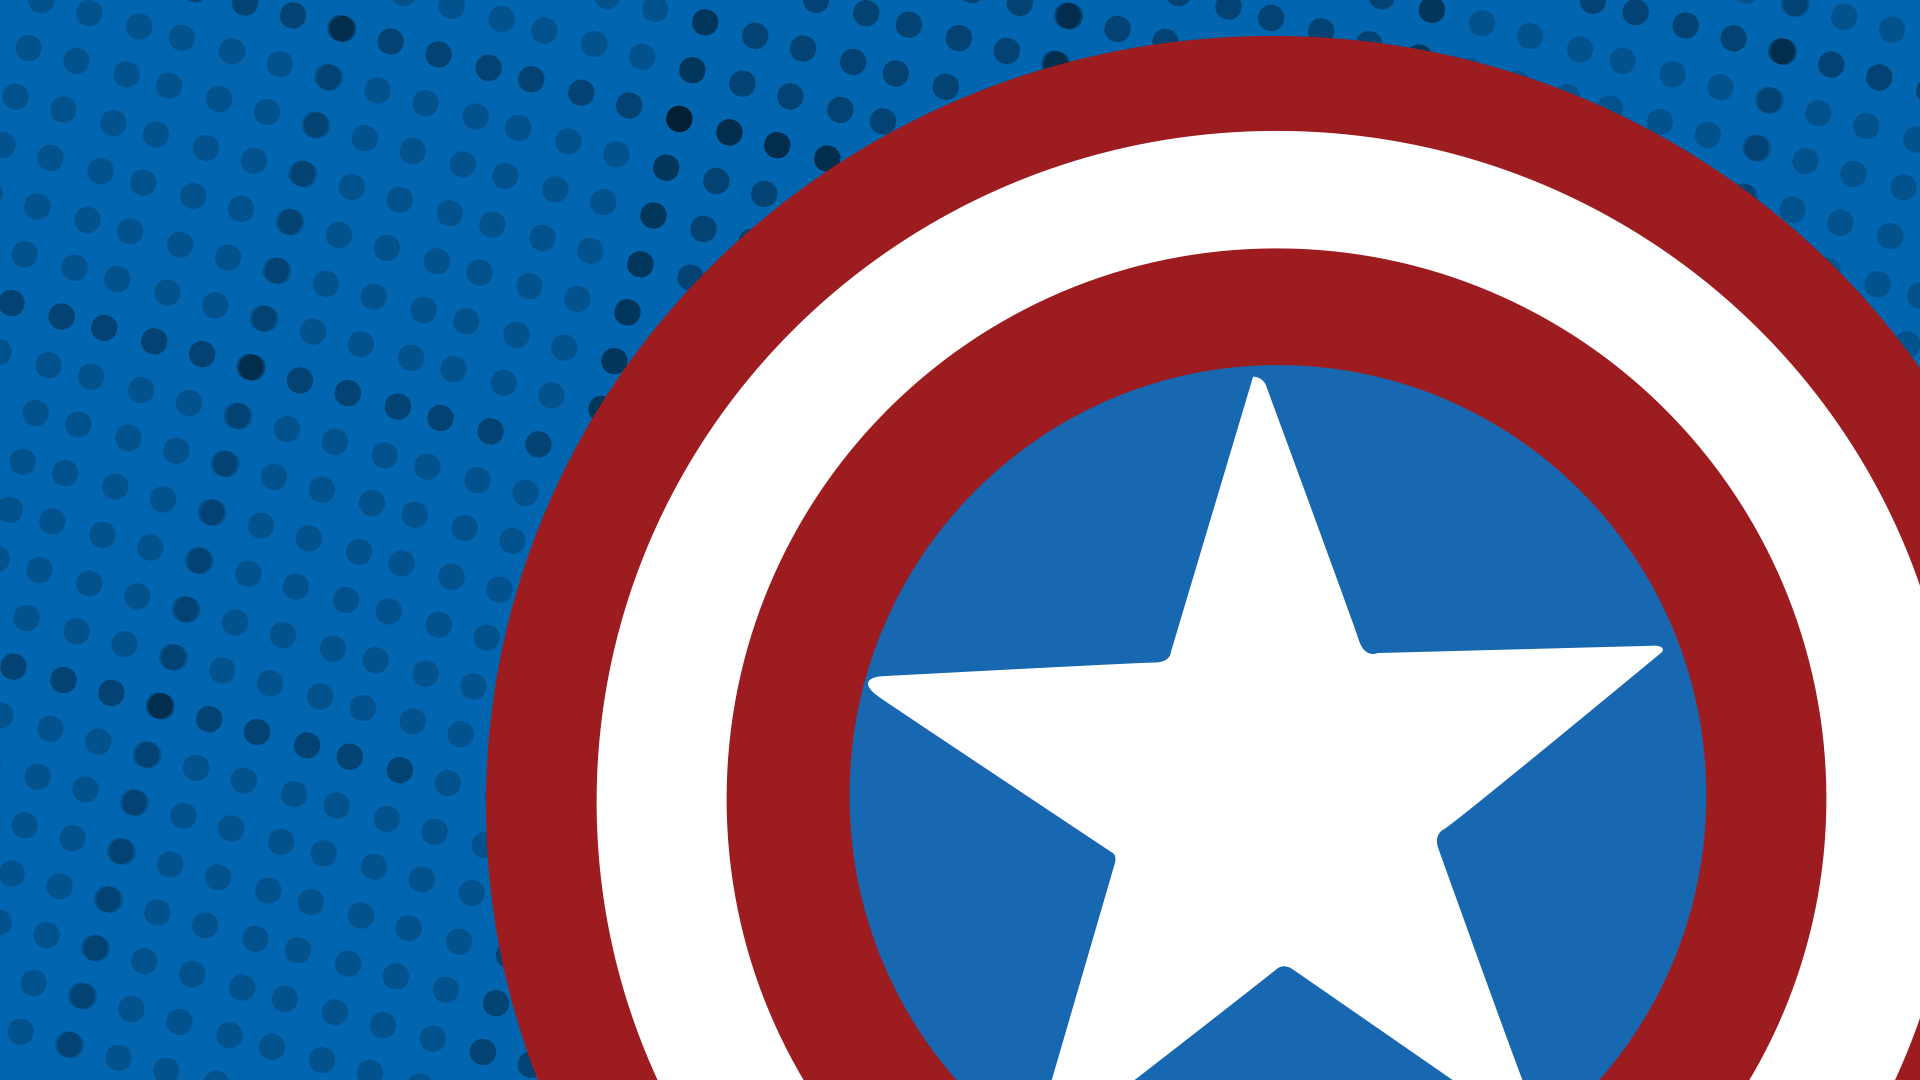 Captain America Shield Background